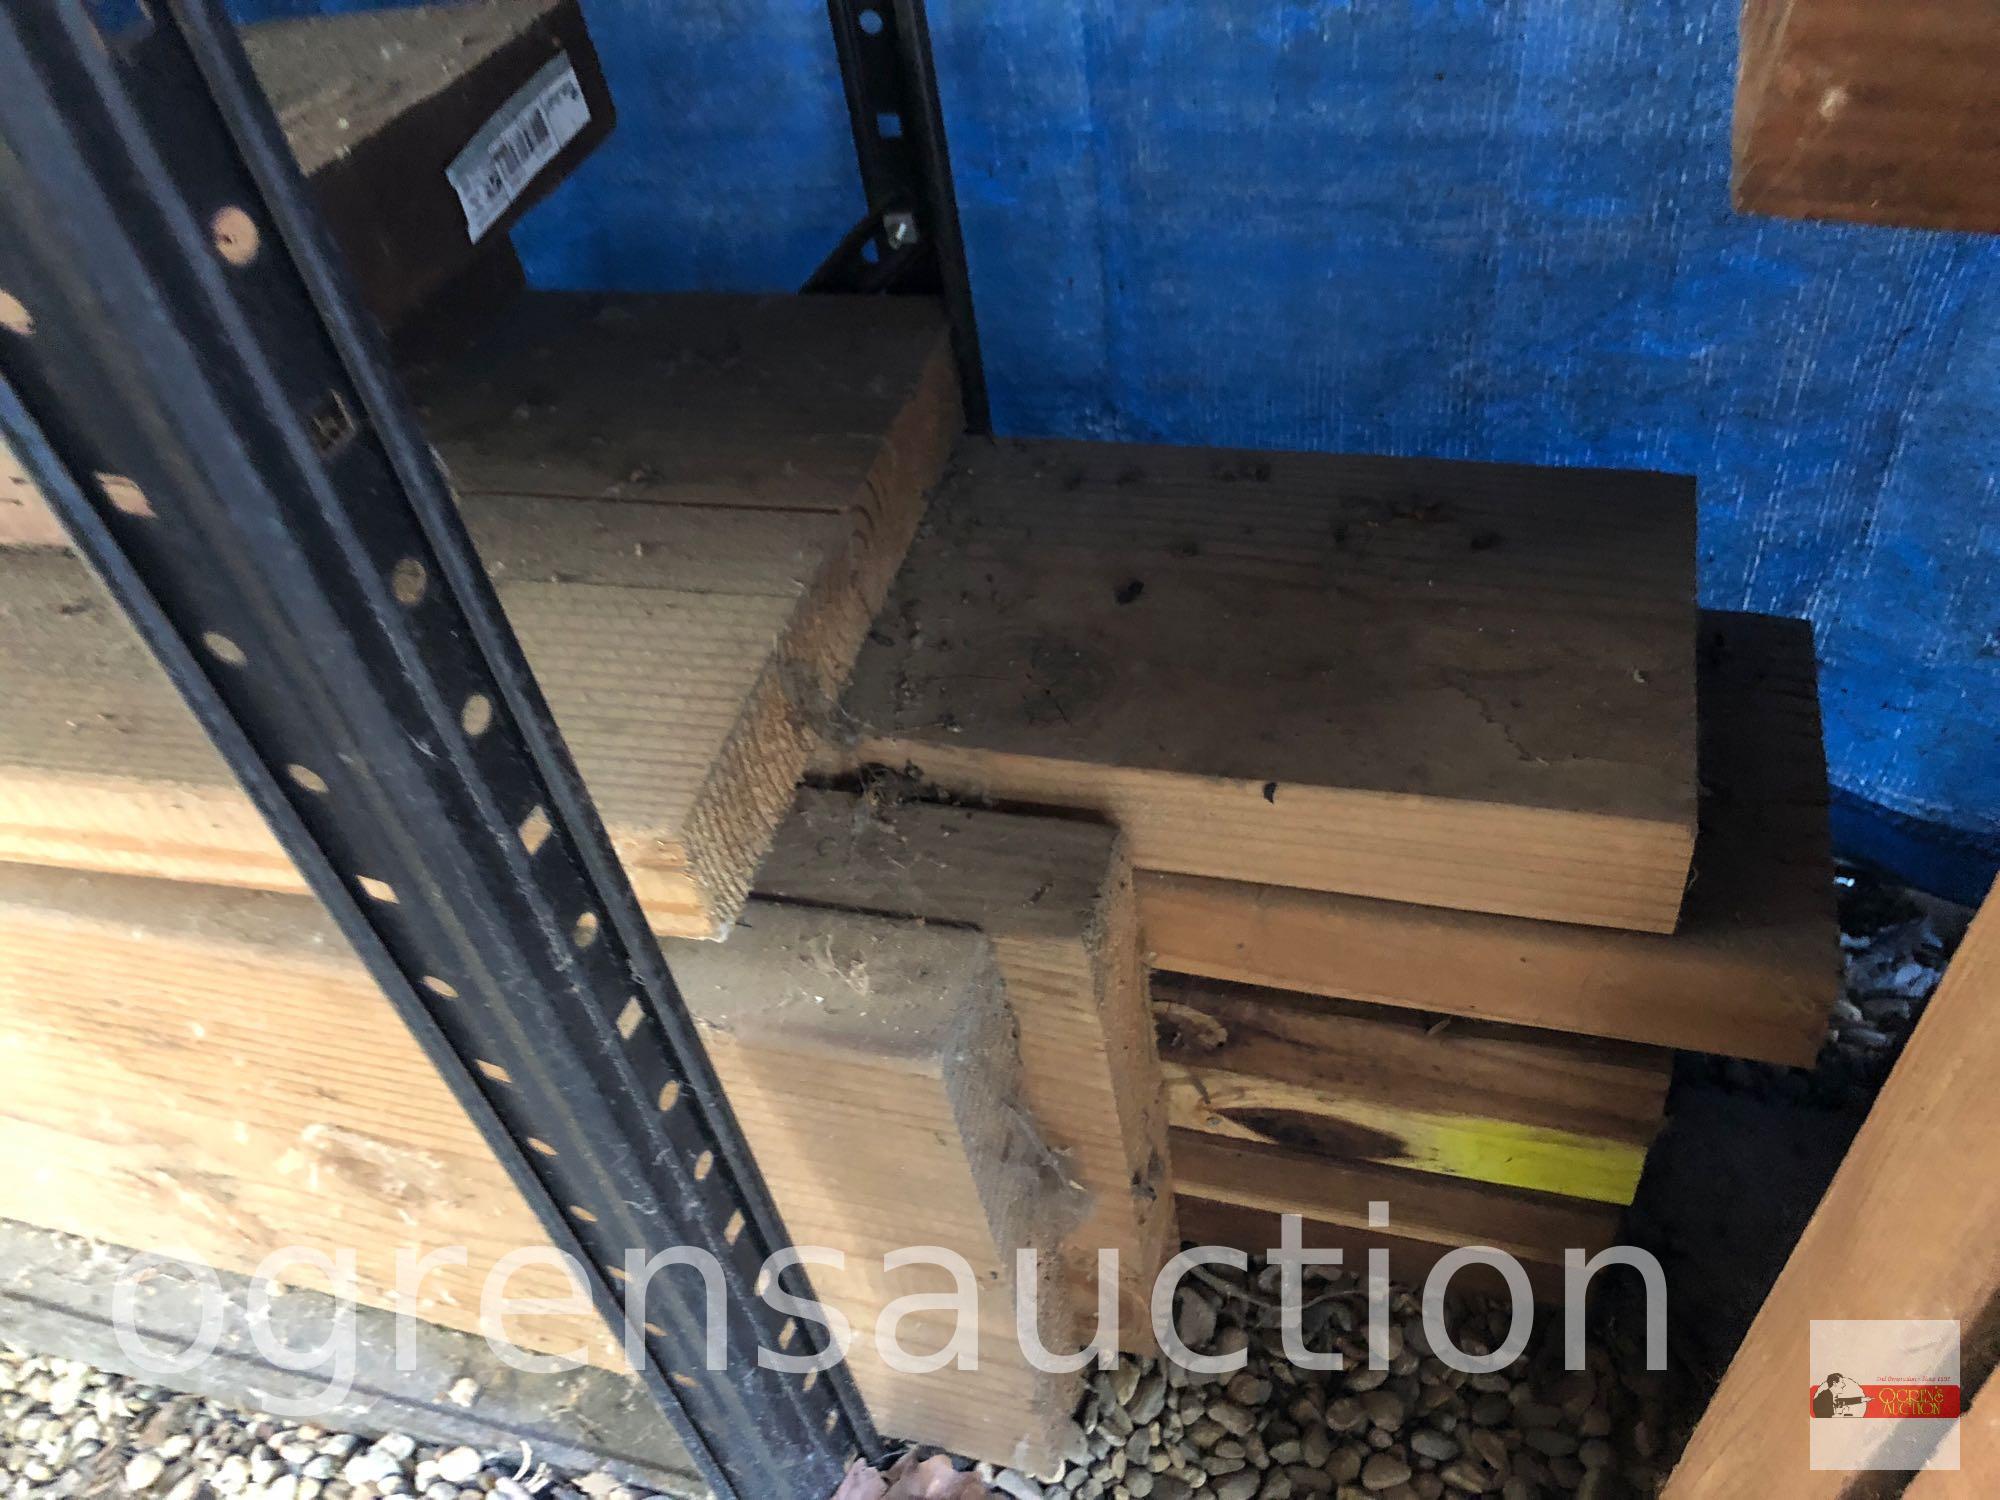 Building Supplies - misc. wood and metal storage racks